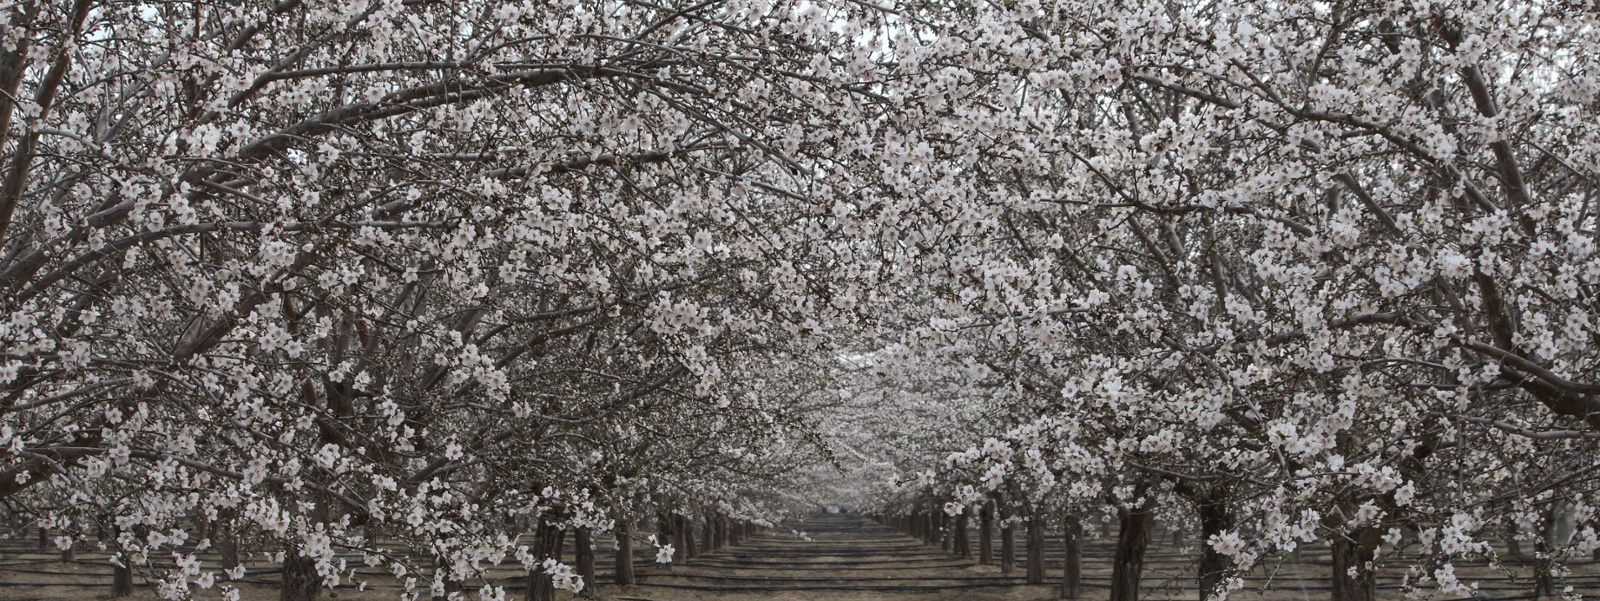 Almond acreage drops but rains, trade boost hopes